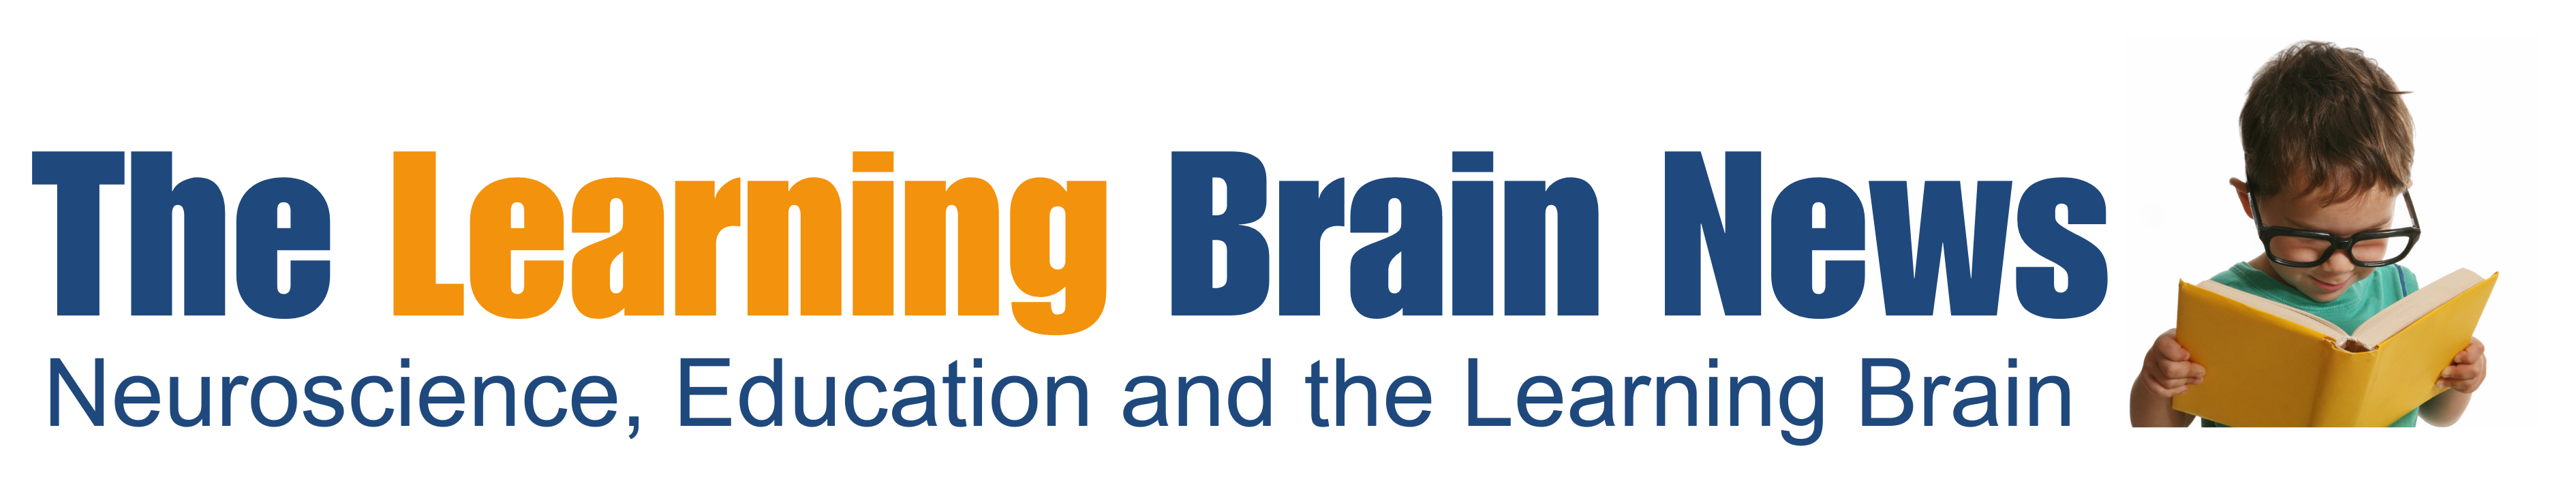 Learning Brain News Header-1